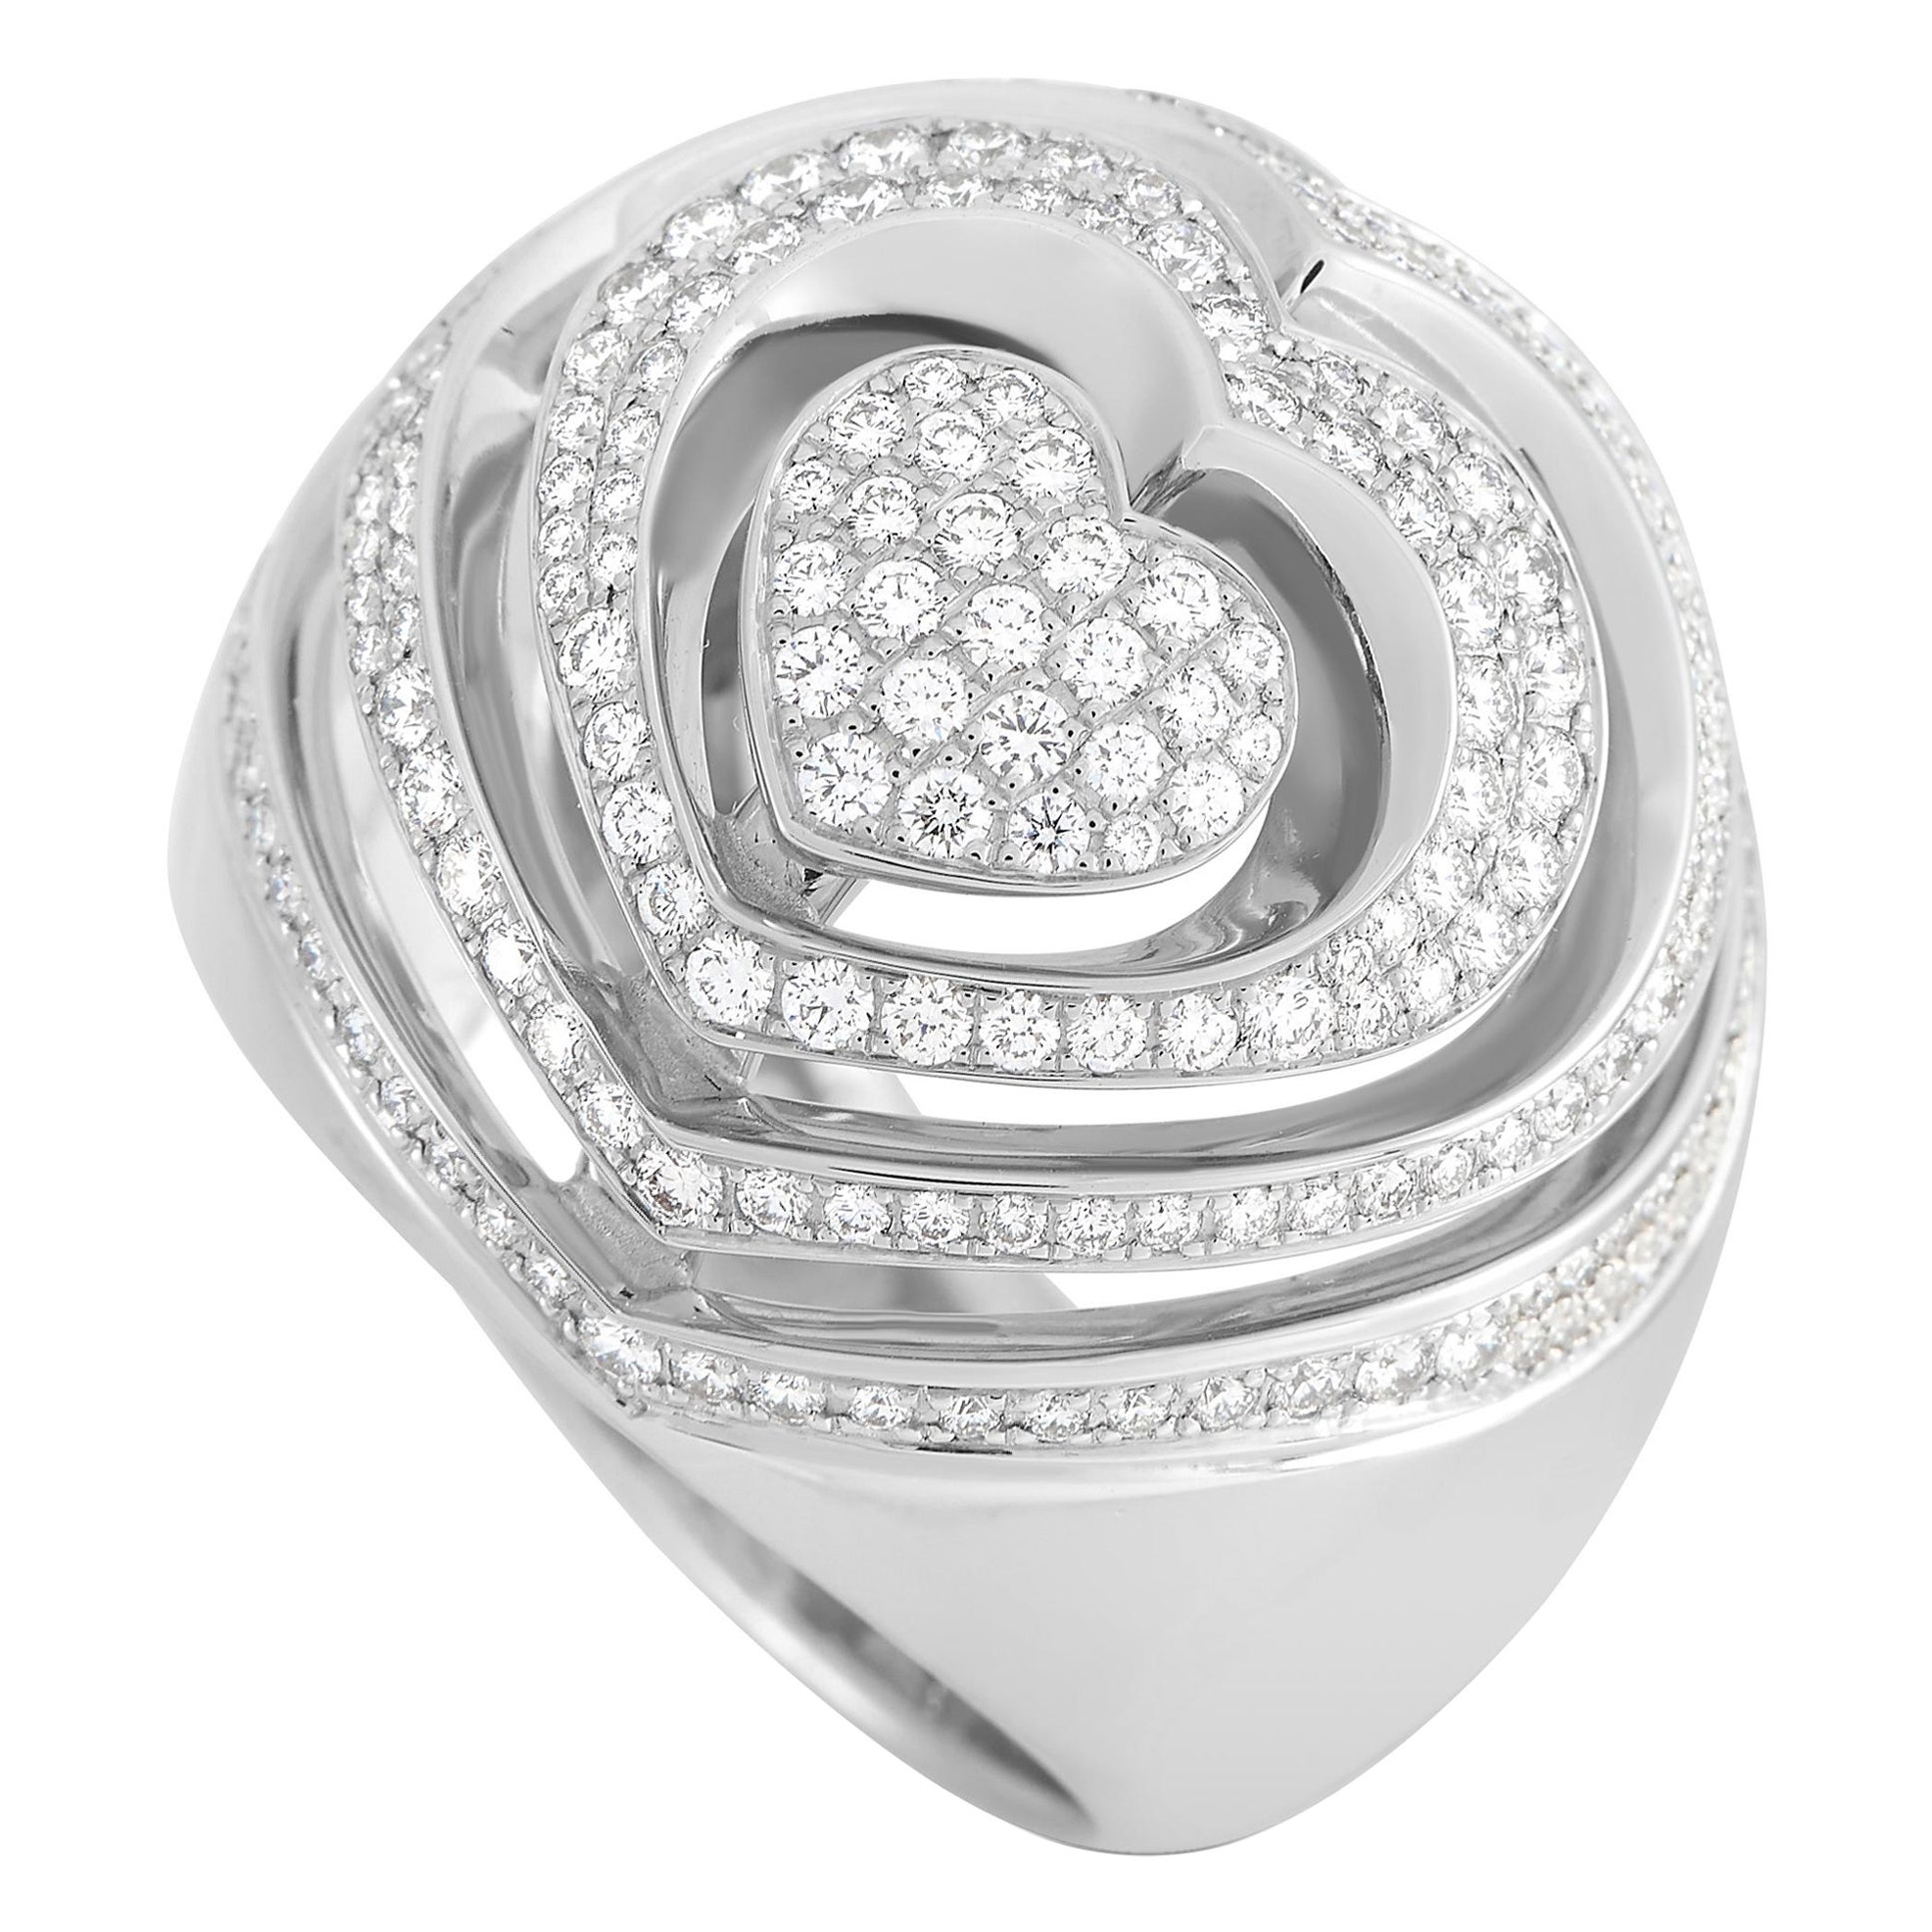 Chopard 18K White Gold 1.17 Ct Diamond Ring